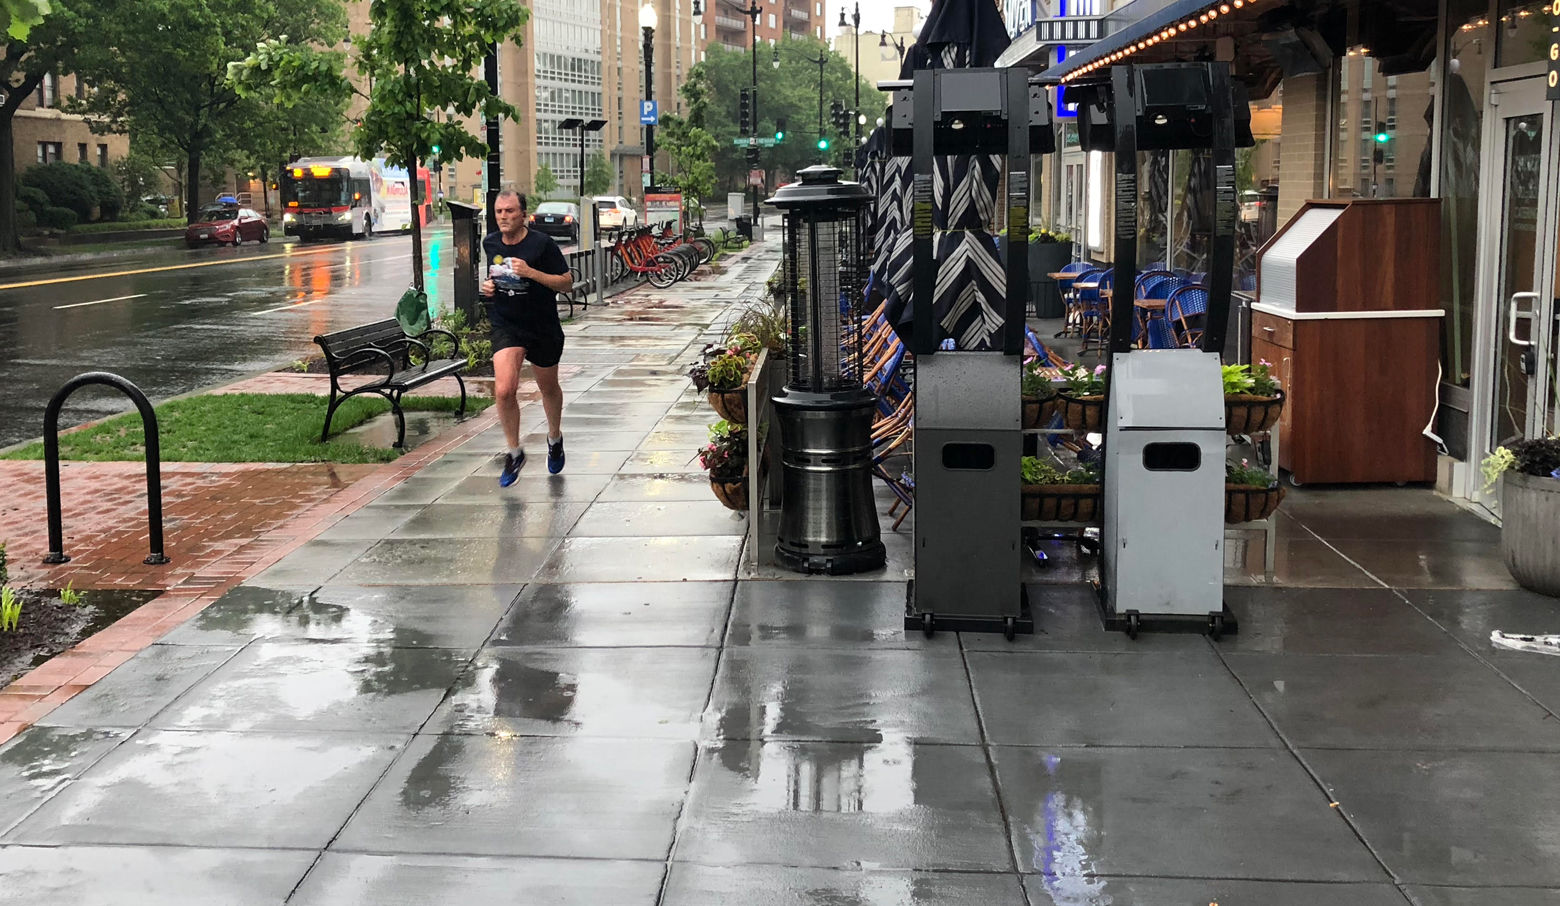 A runner braves the rain along Wisconsin Avenue in Washington, D.C. on Friday. (WTOP/Dan Friedell)